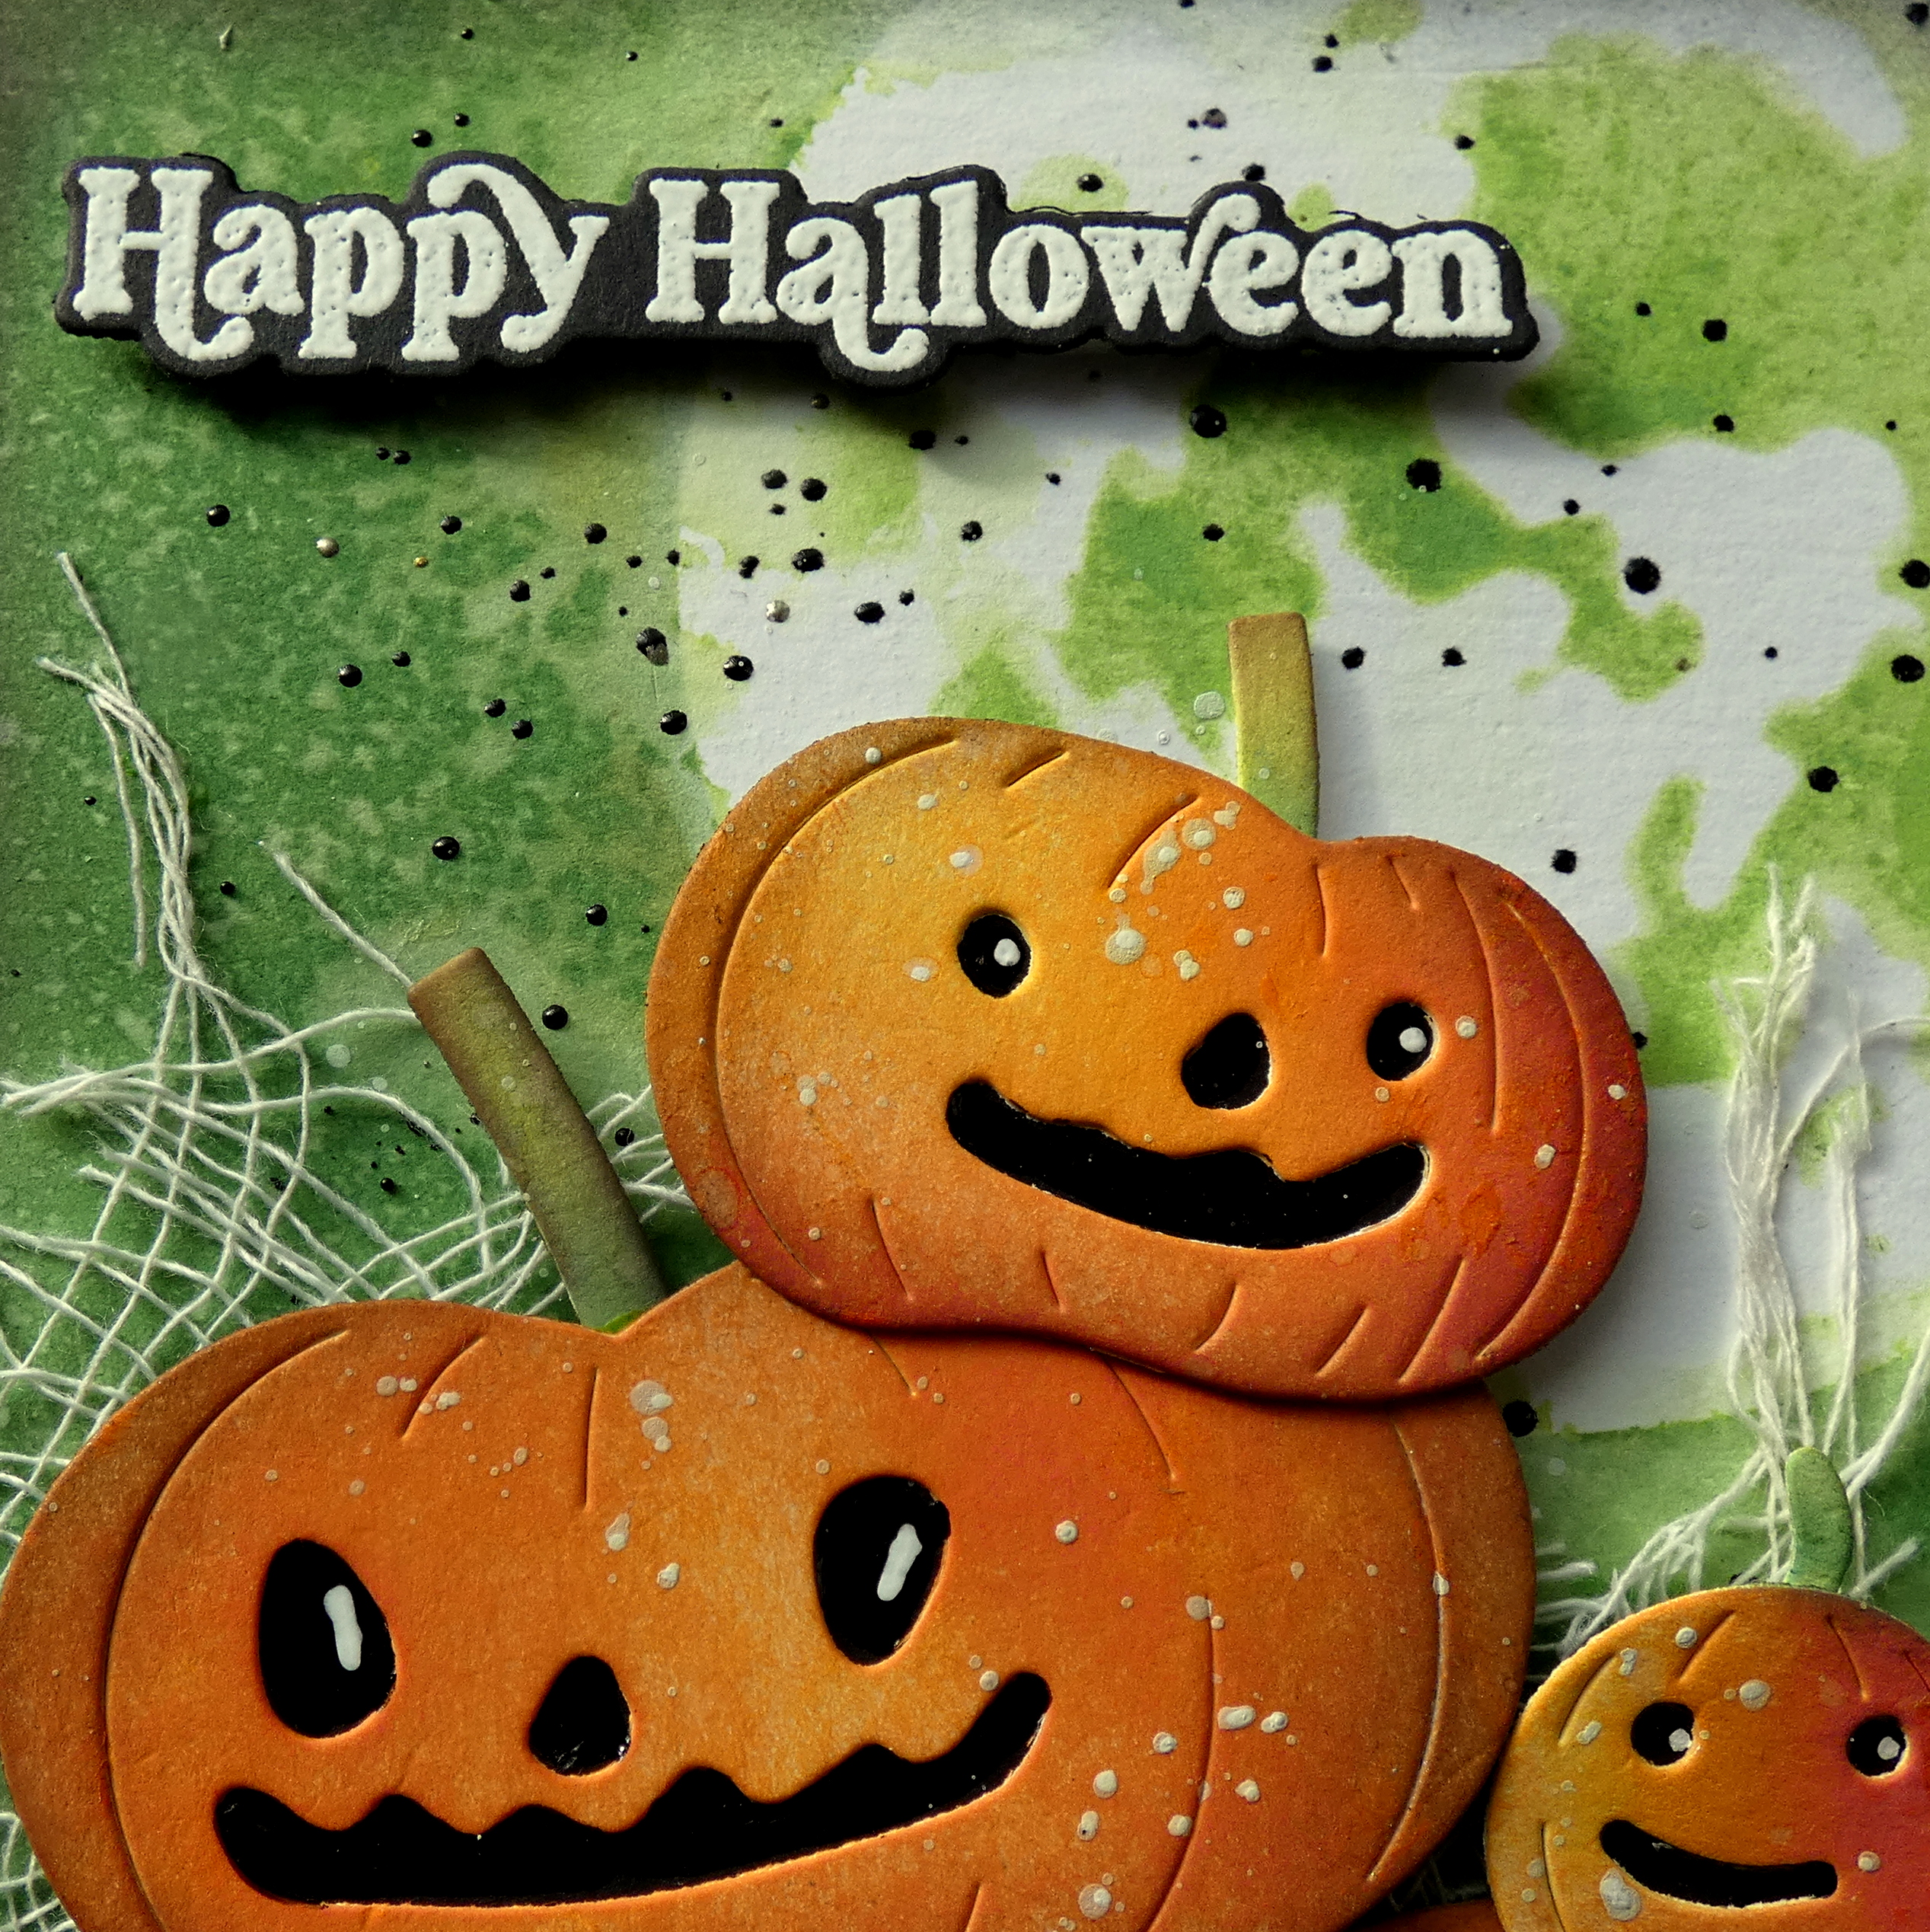 American Crafts Happy Halloween 6 x 8 Paper Pad 34024700 – Simon Says Stamp